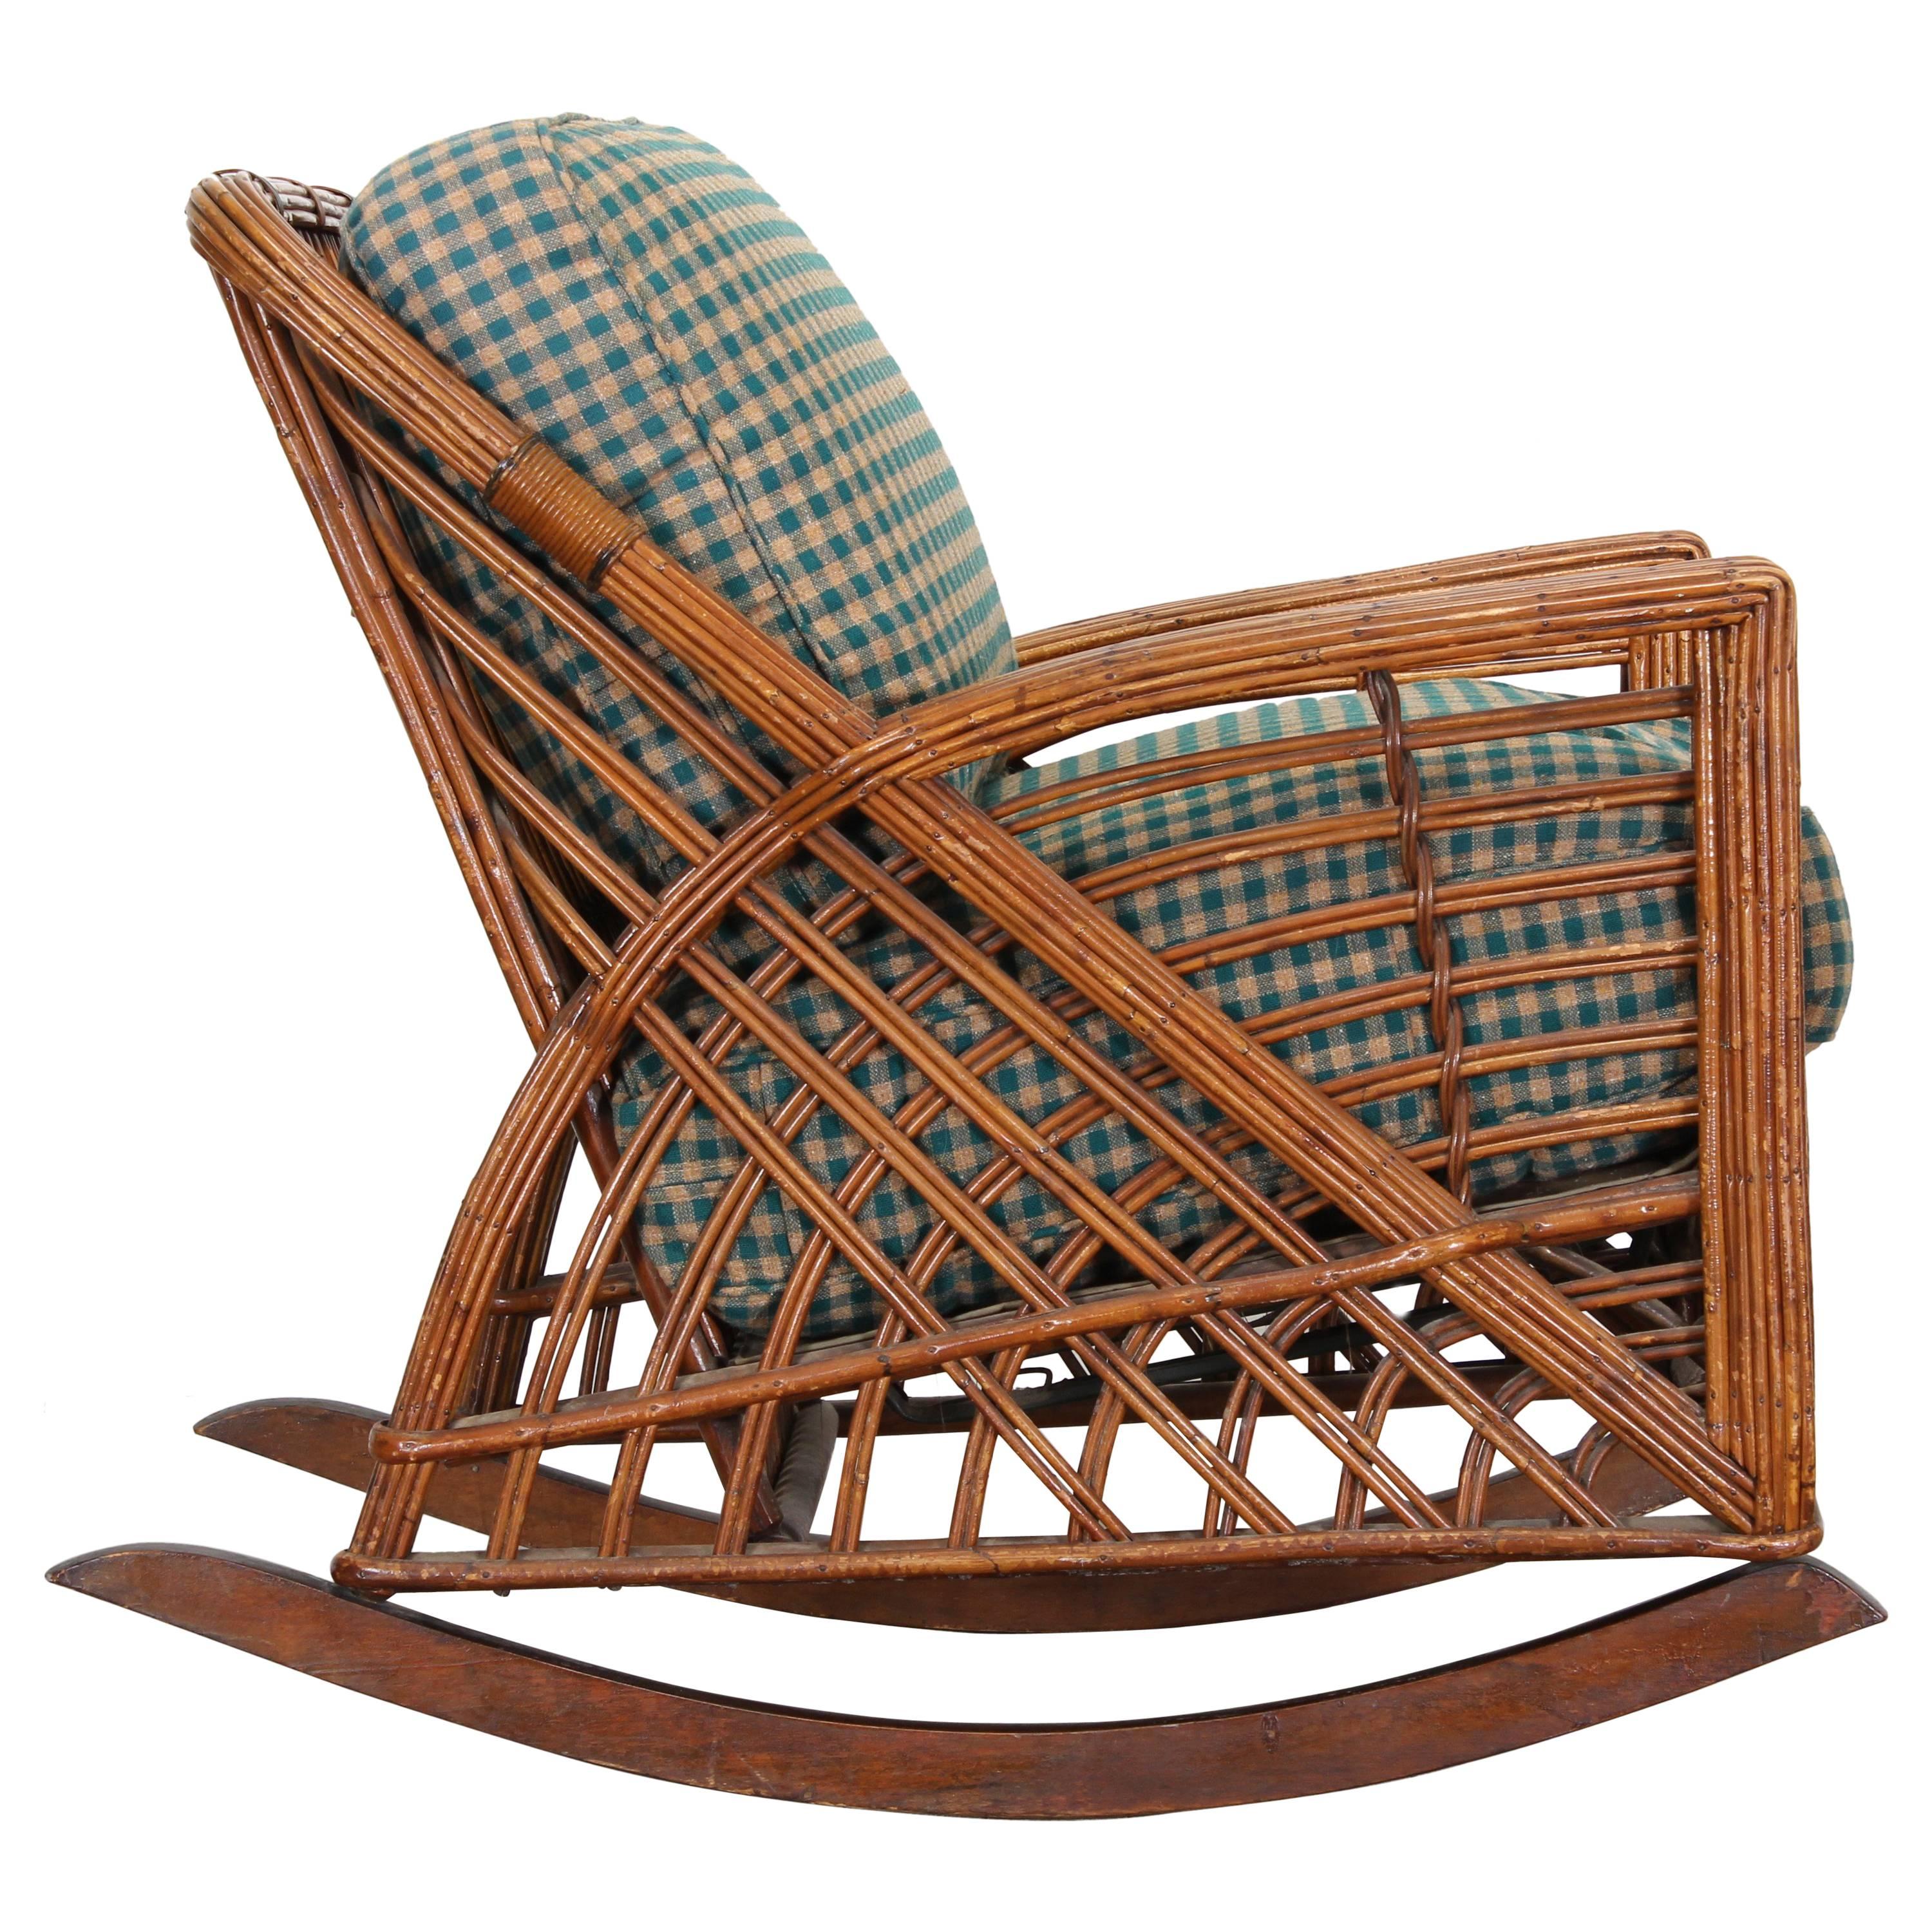 Cramer Art Deco Stick Reed Rattan Wicker Rocking Chair, 1930s